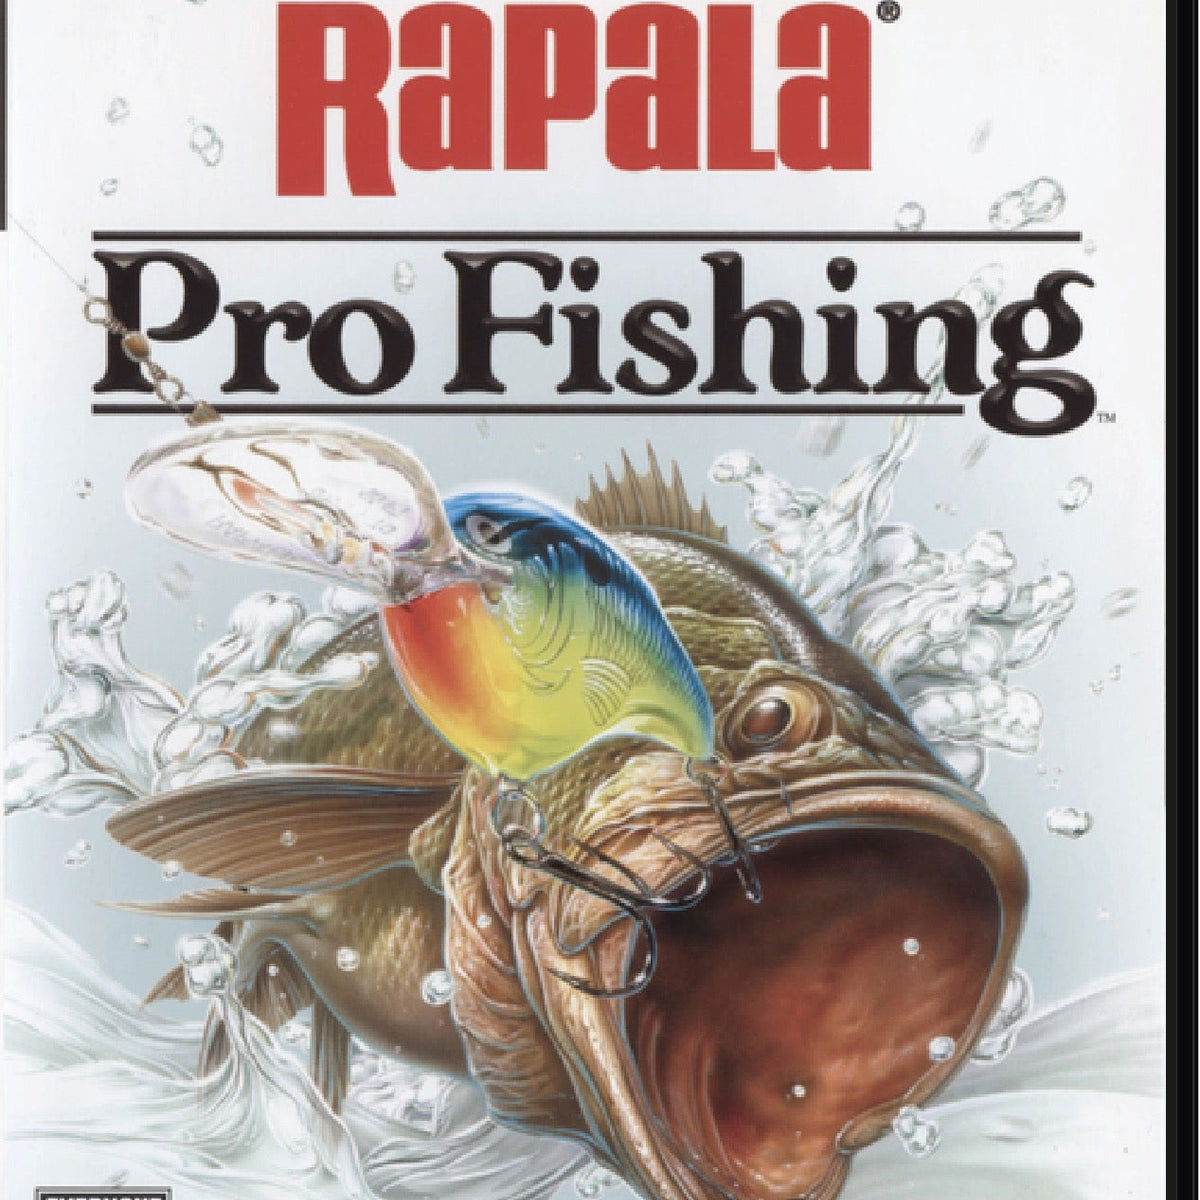 Ps2 Rapala Pro Fishing